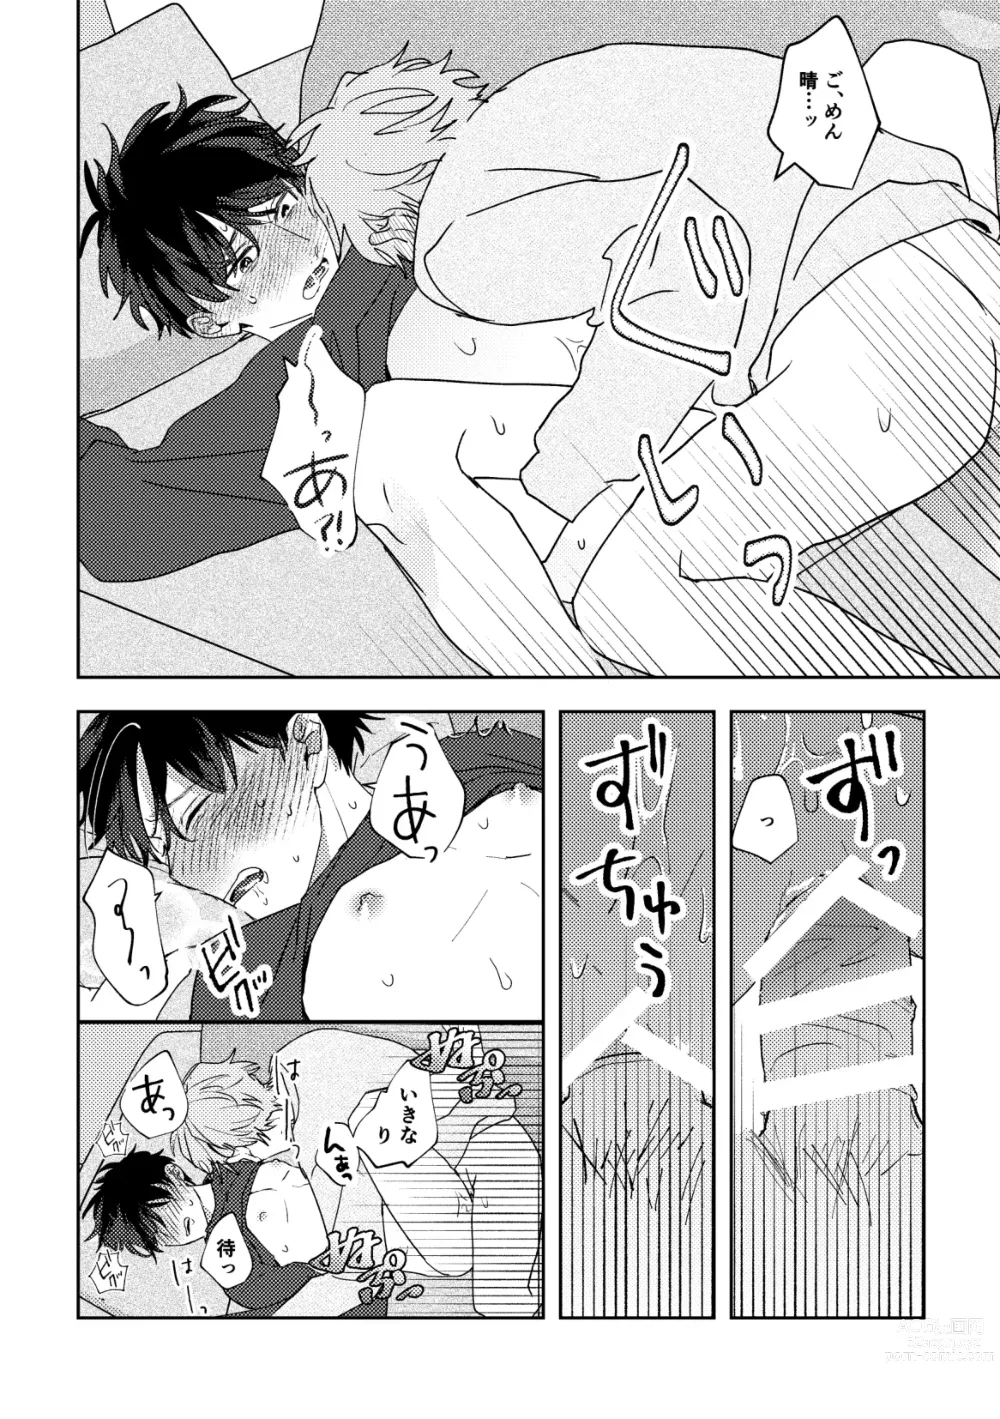 Page 64 of doujinshi Ame ni Hare wo Kau